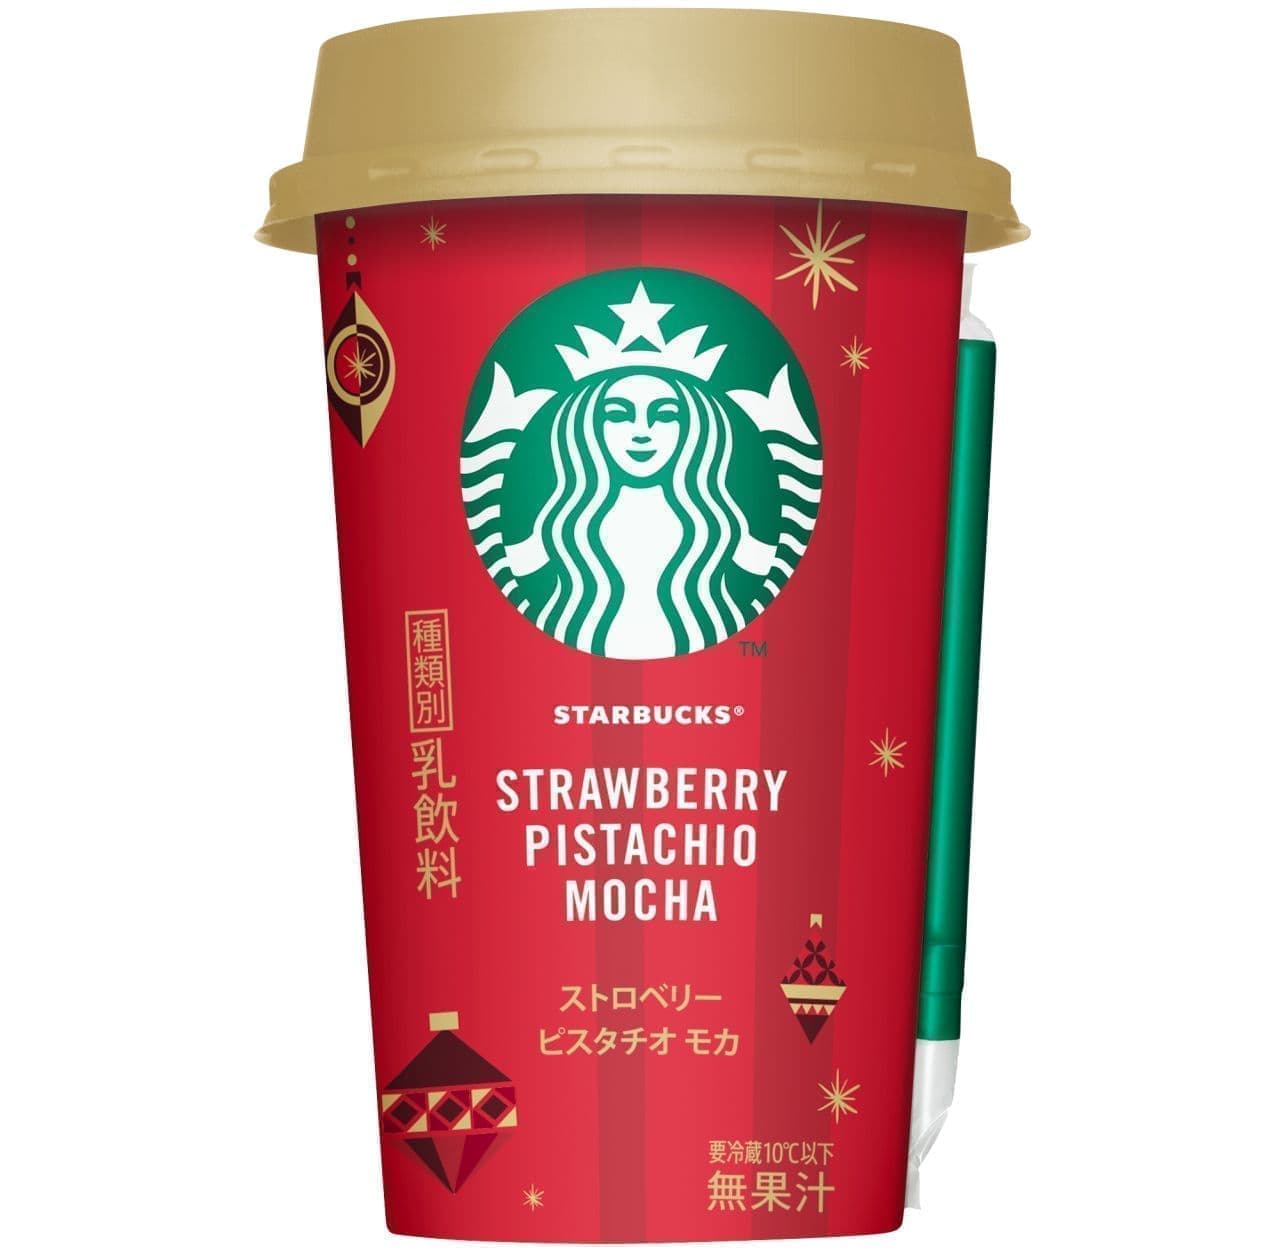 Starbucks new chilled cup "Strawberry Pistachio Mocha"